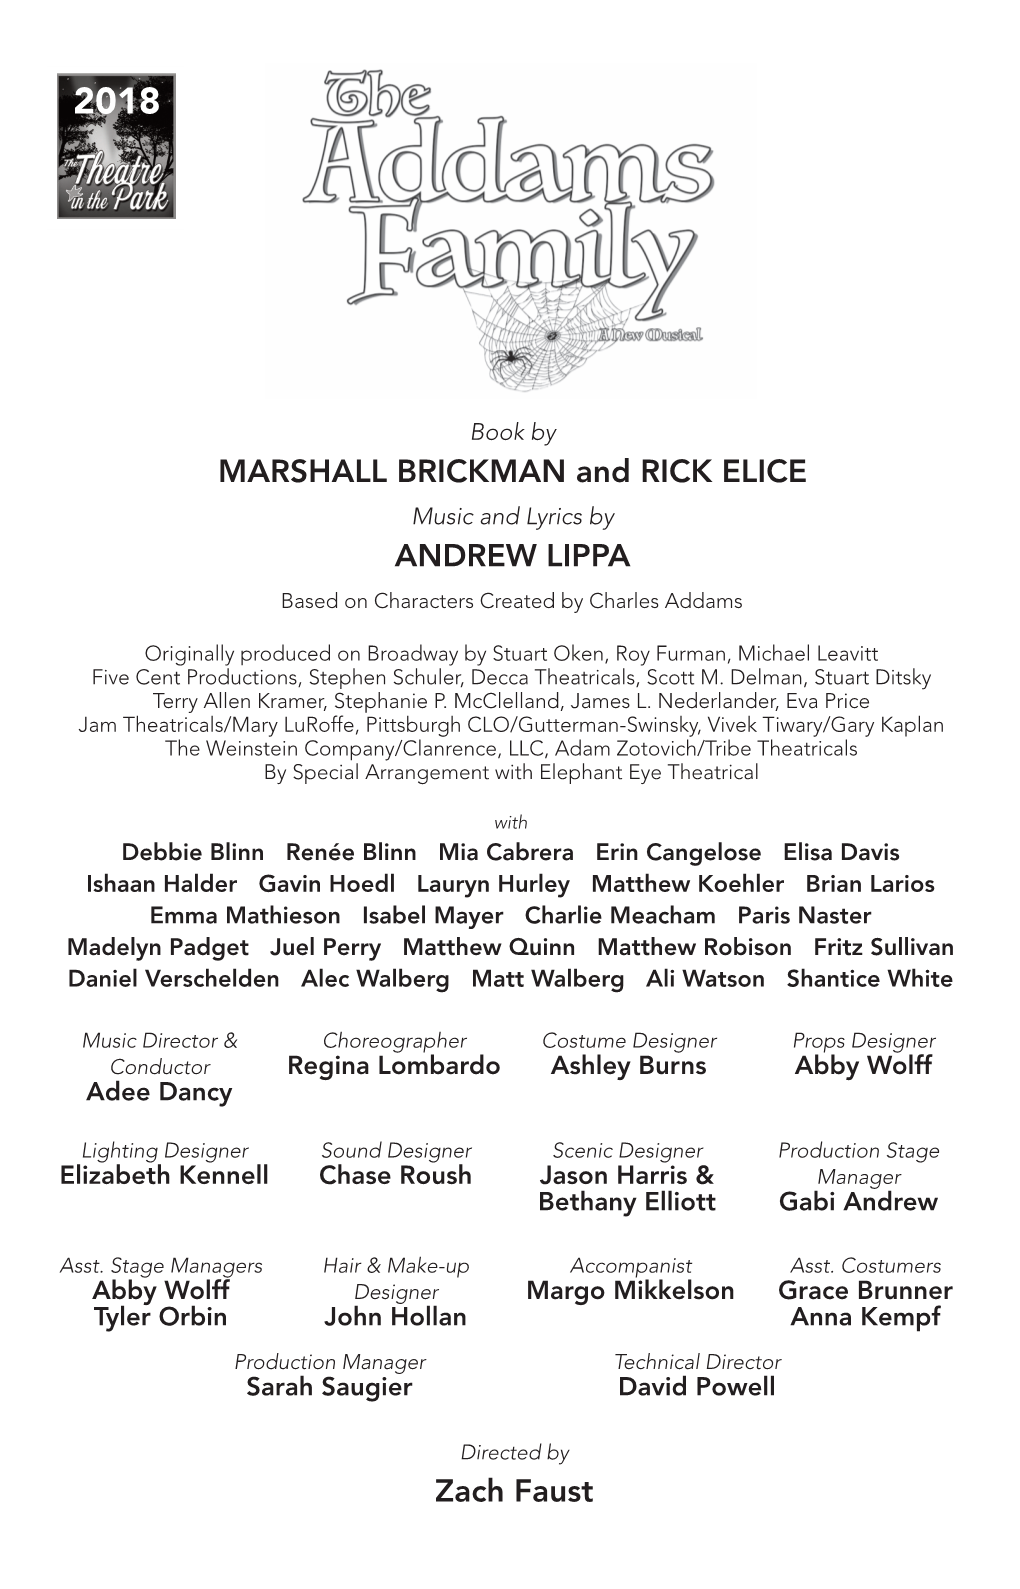 MARSHALL BRICKMAN and RICK ELICE ANDREW LIPPA Zach Faust